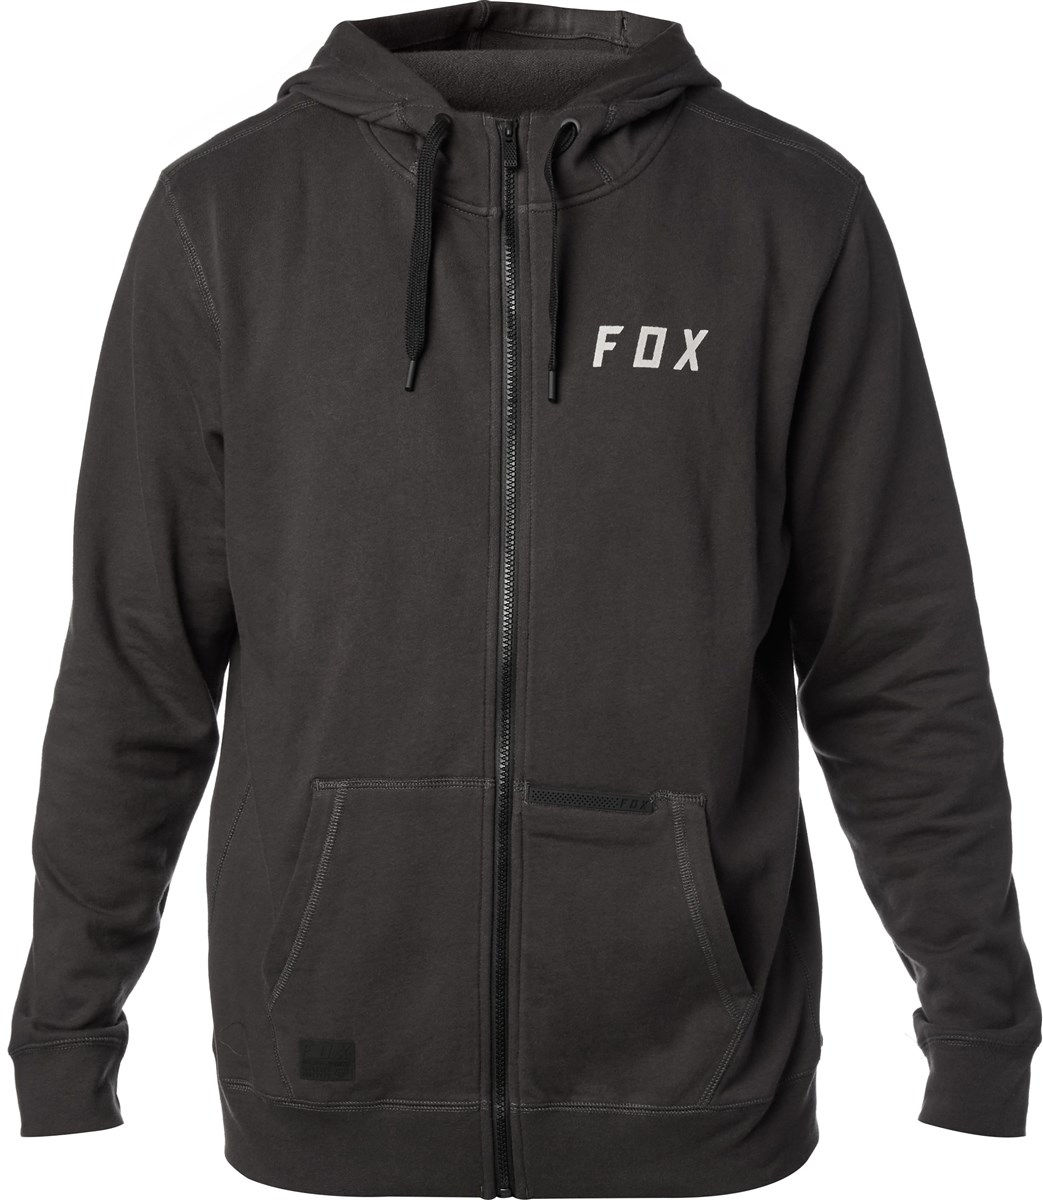 Fox Clothing Rhodes Zip Fleece AW17 product image